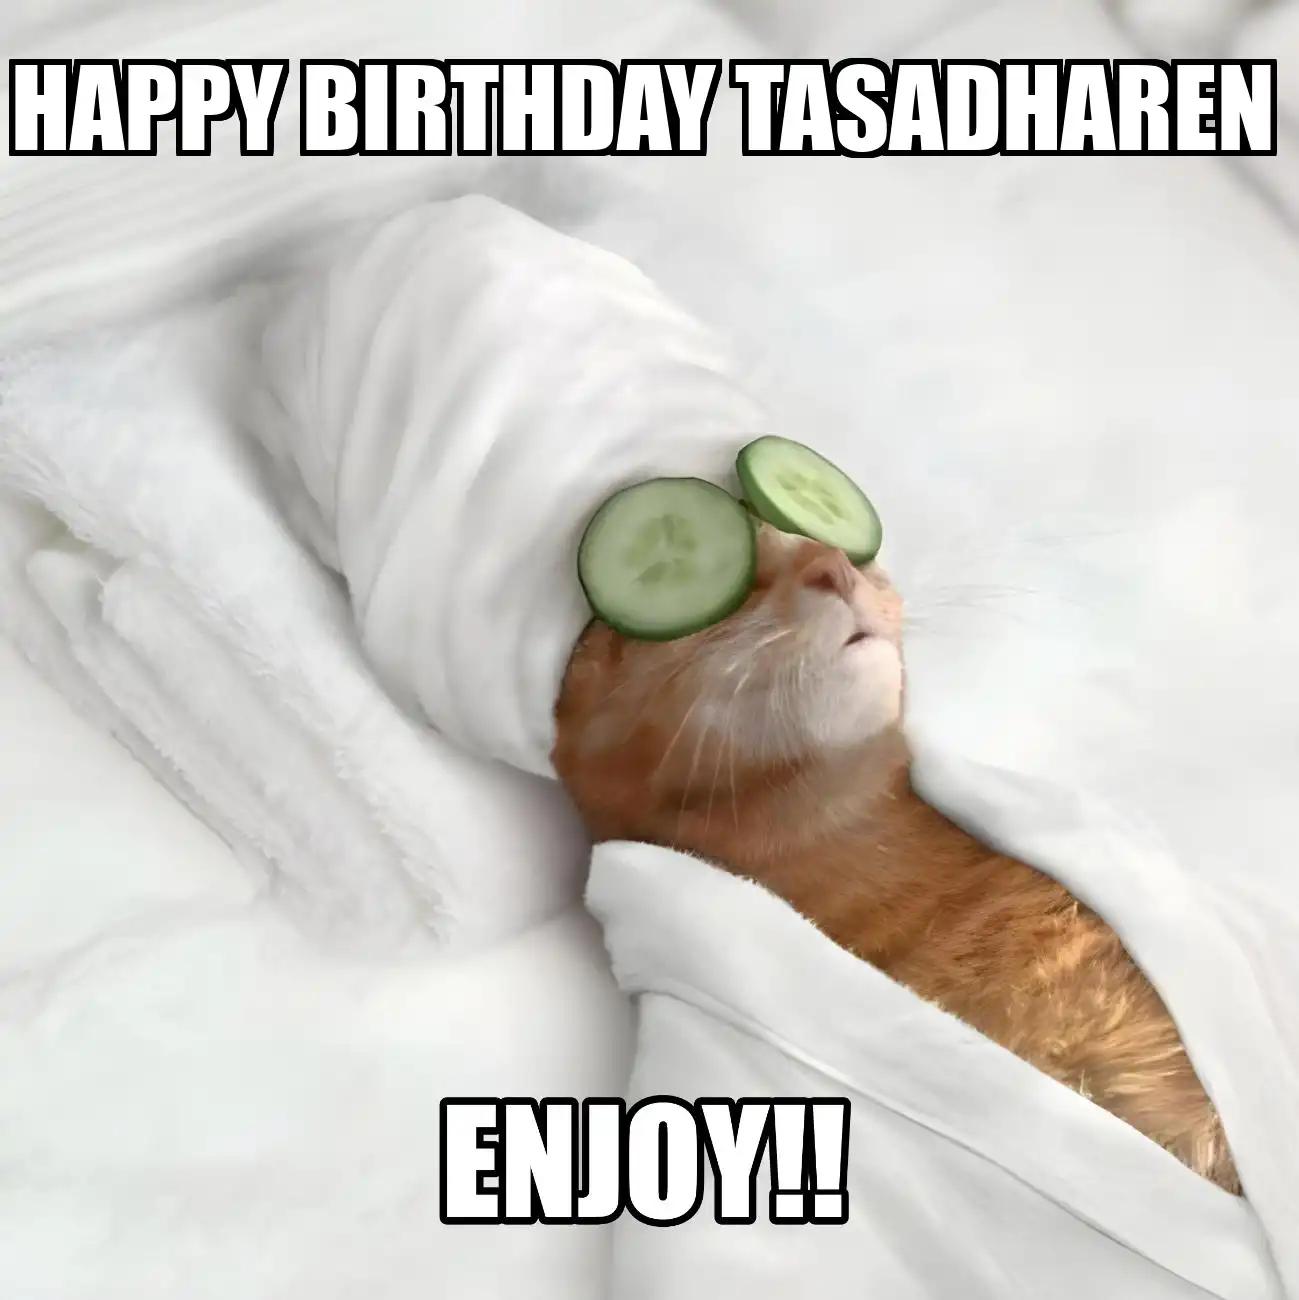 Happy Birthday Tasadharen Enjoy Cat Meme